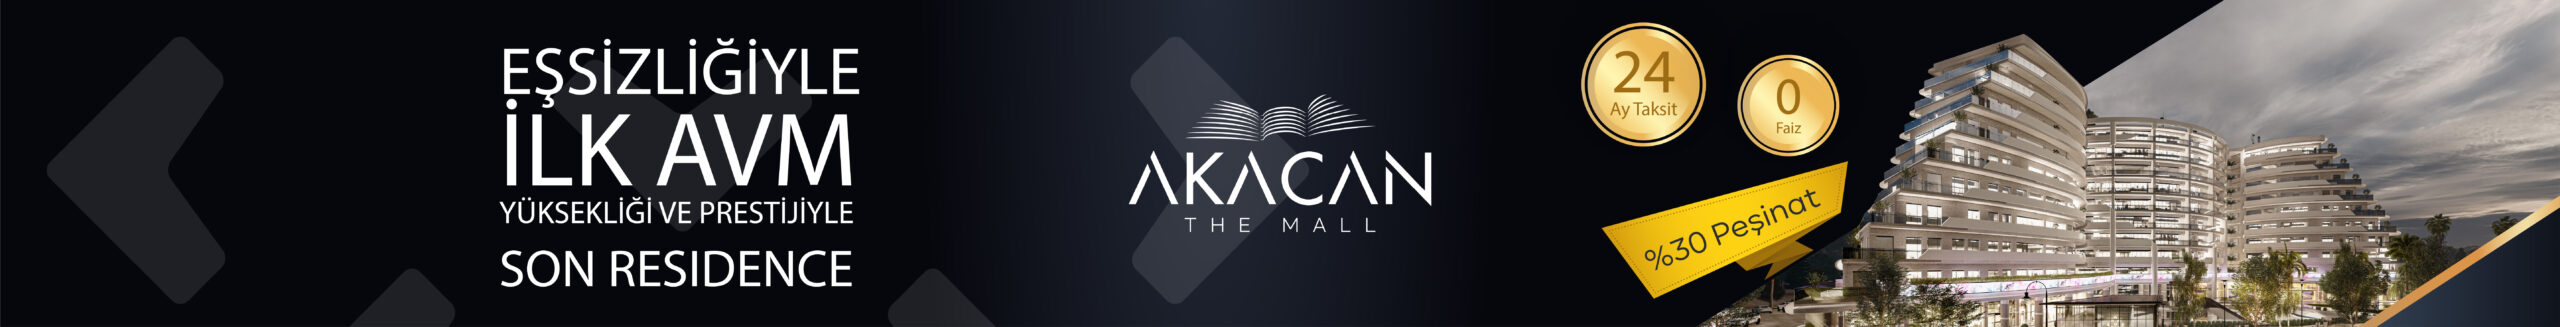 Akacan The Mall